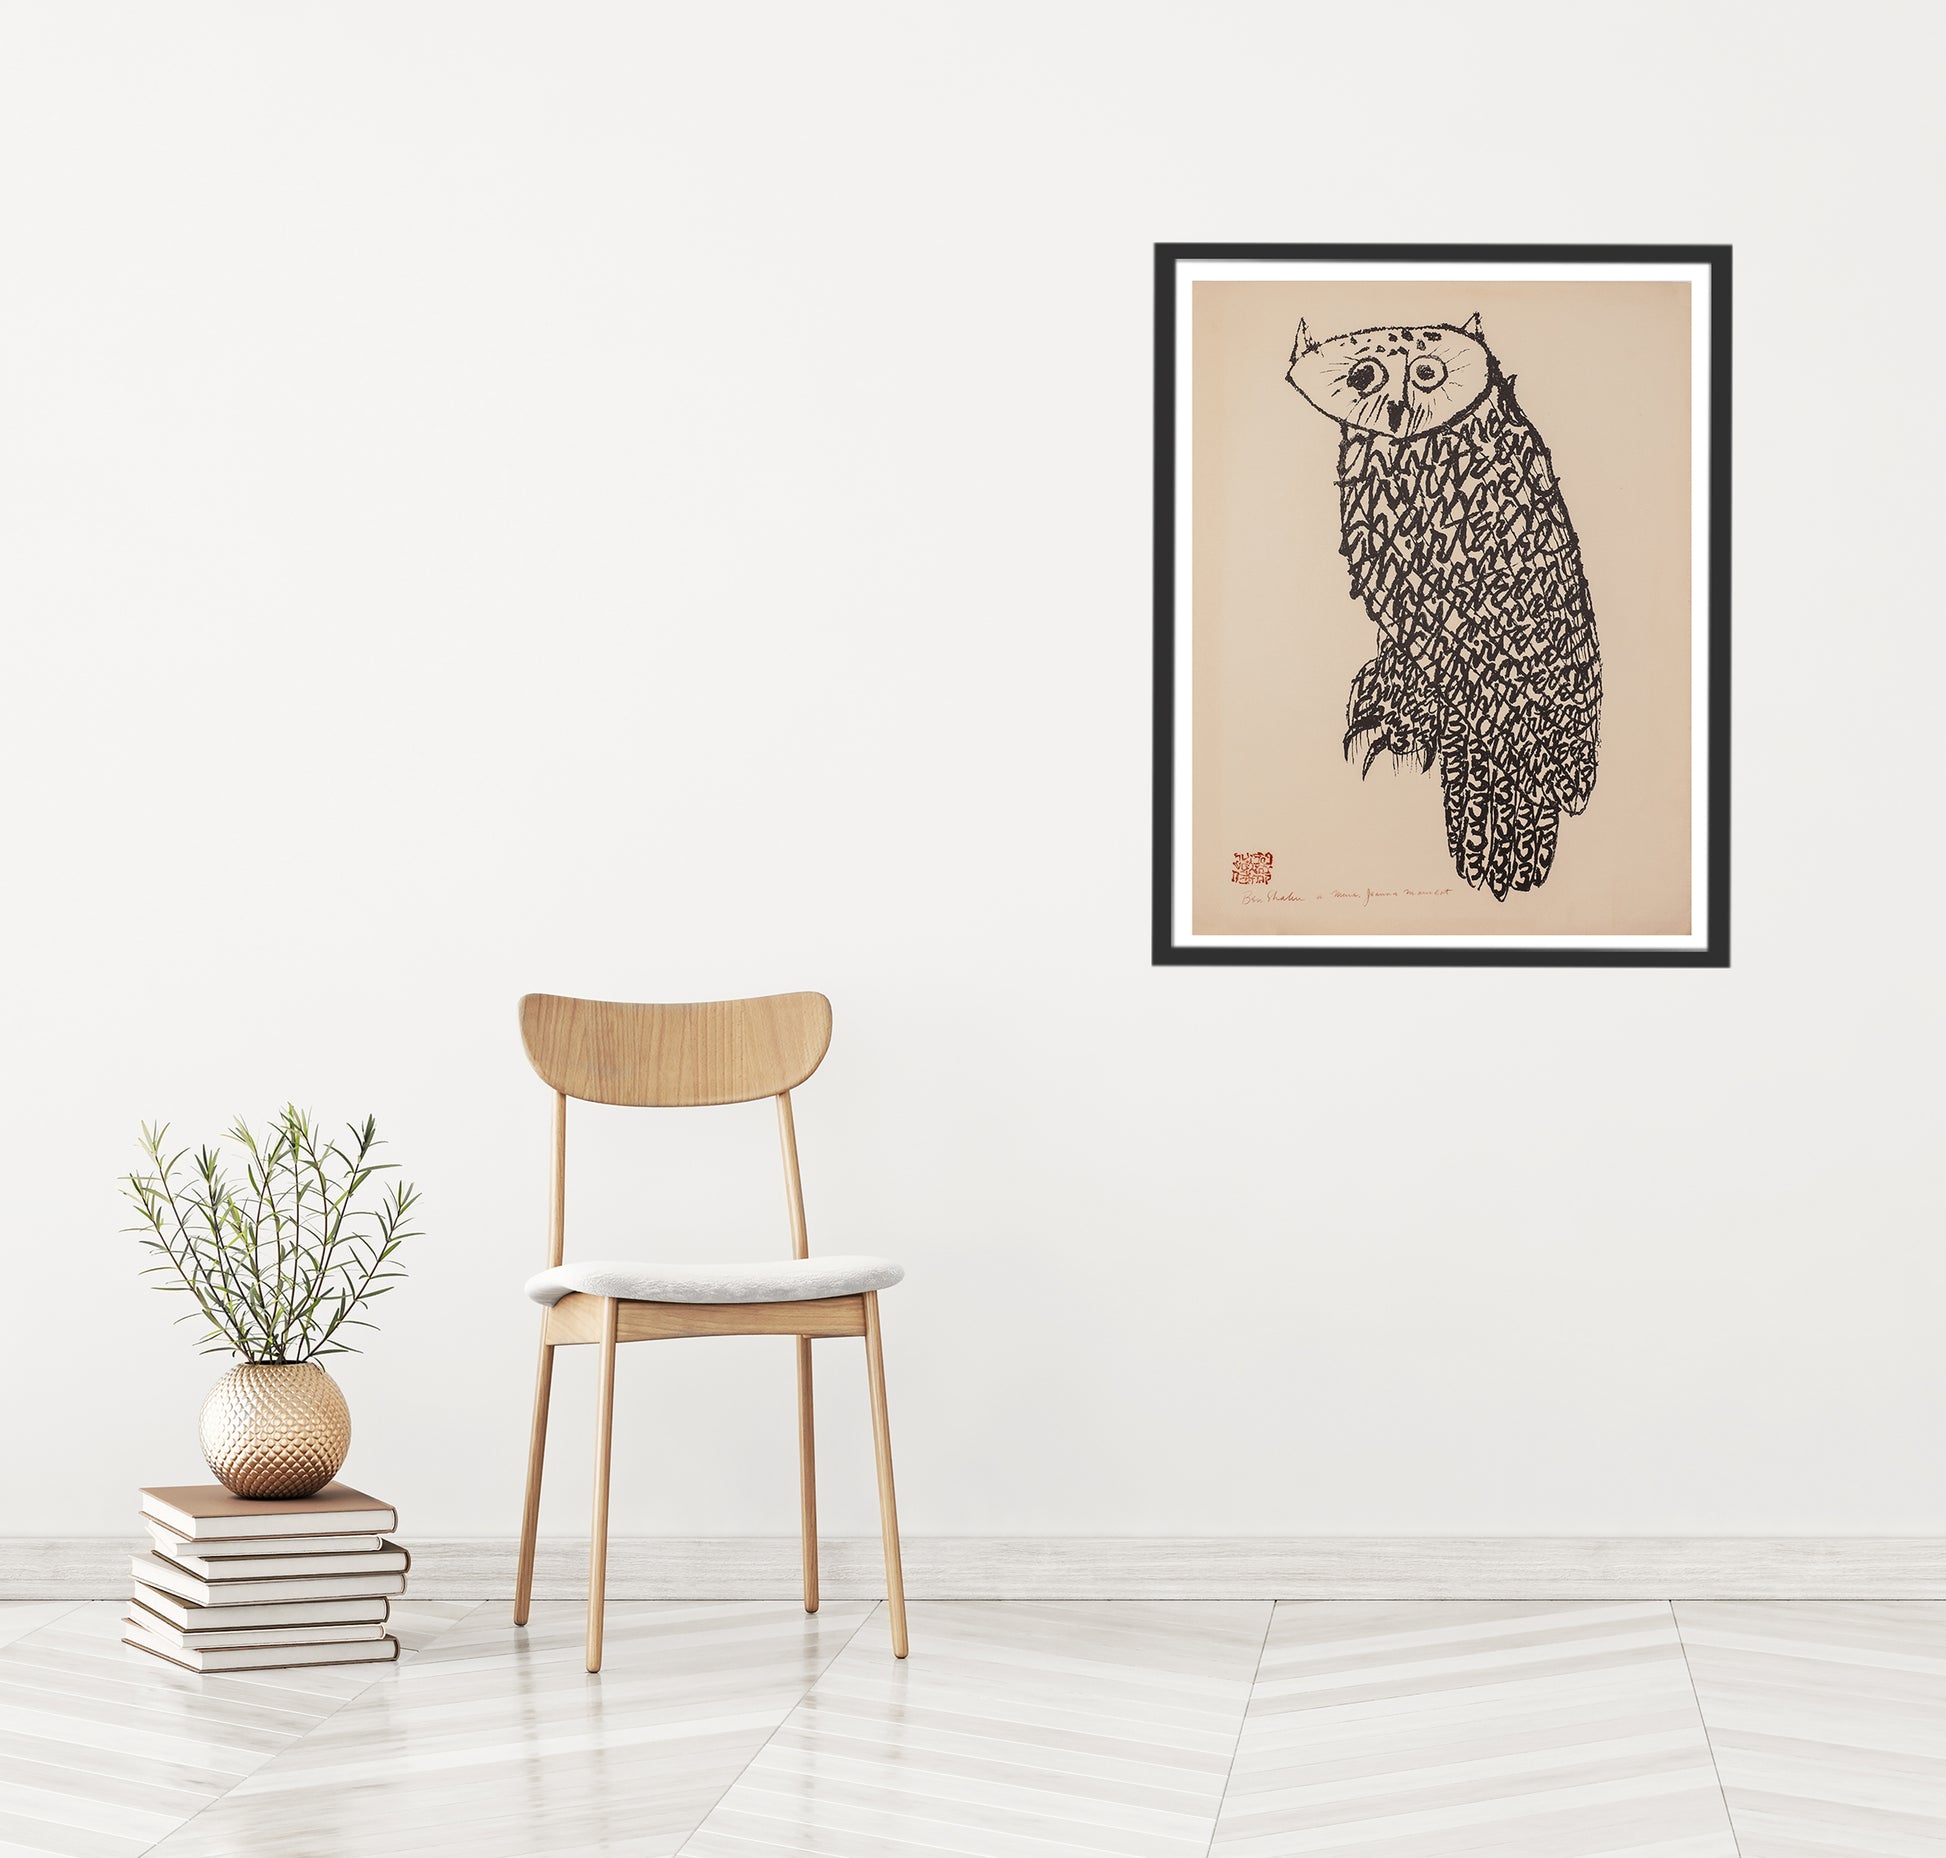 Owl, (No.2) by Ben Shahn, 1968 - Mourlot Editions - Fine_Art - Poster - Lithograph - Wall Art - Vintage - Prints - Original